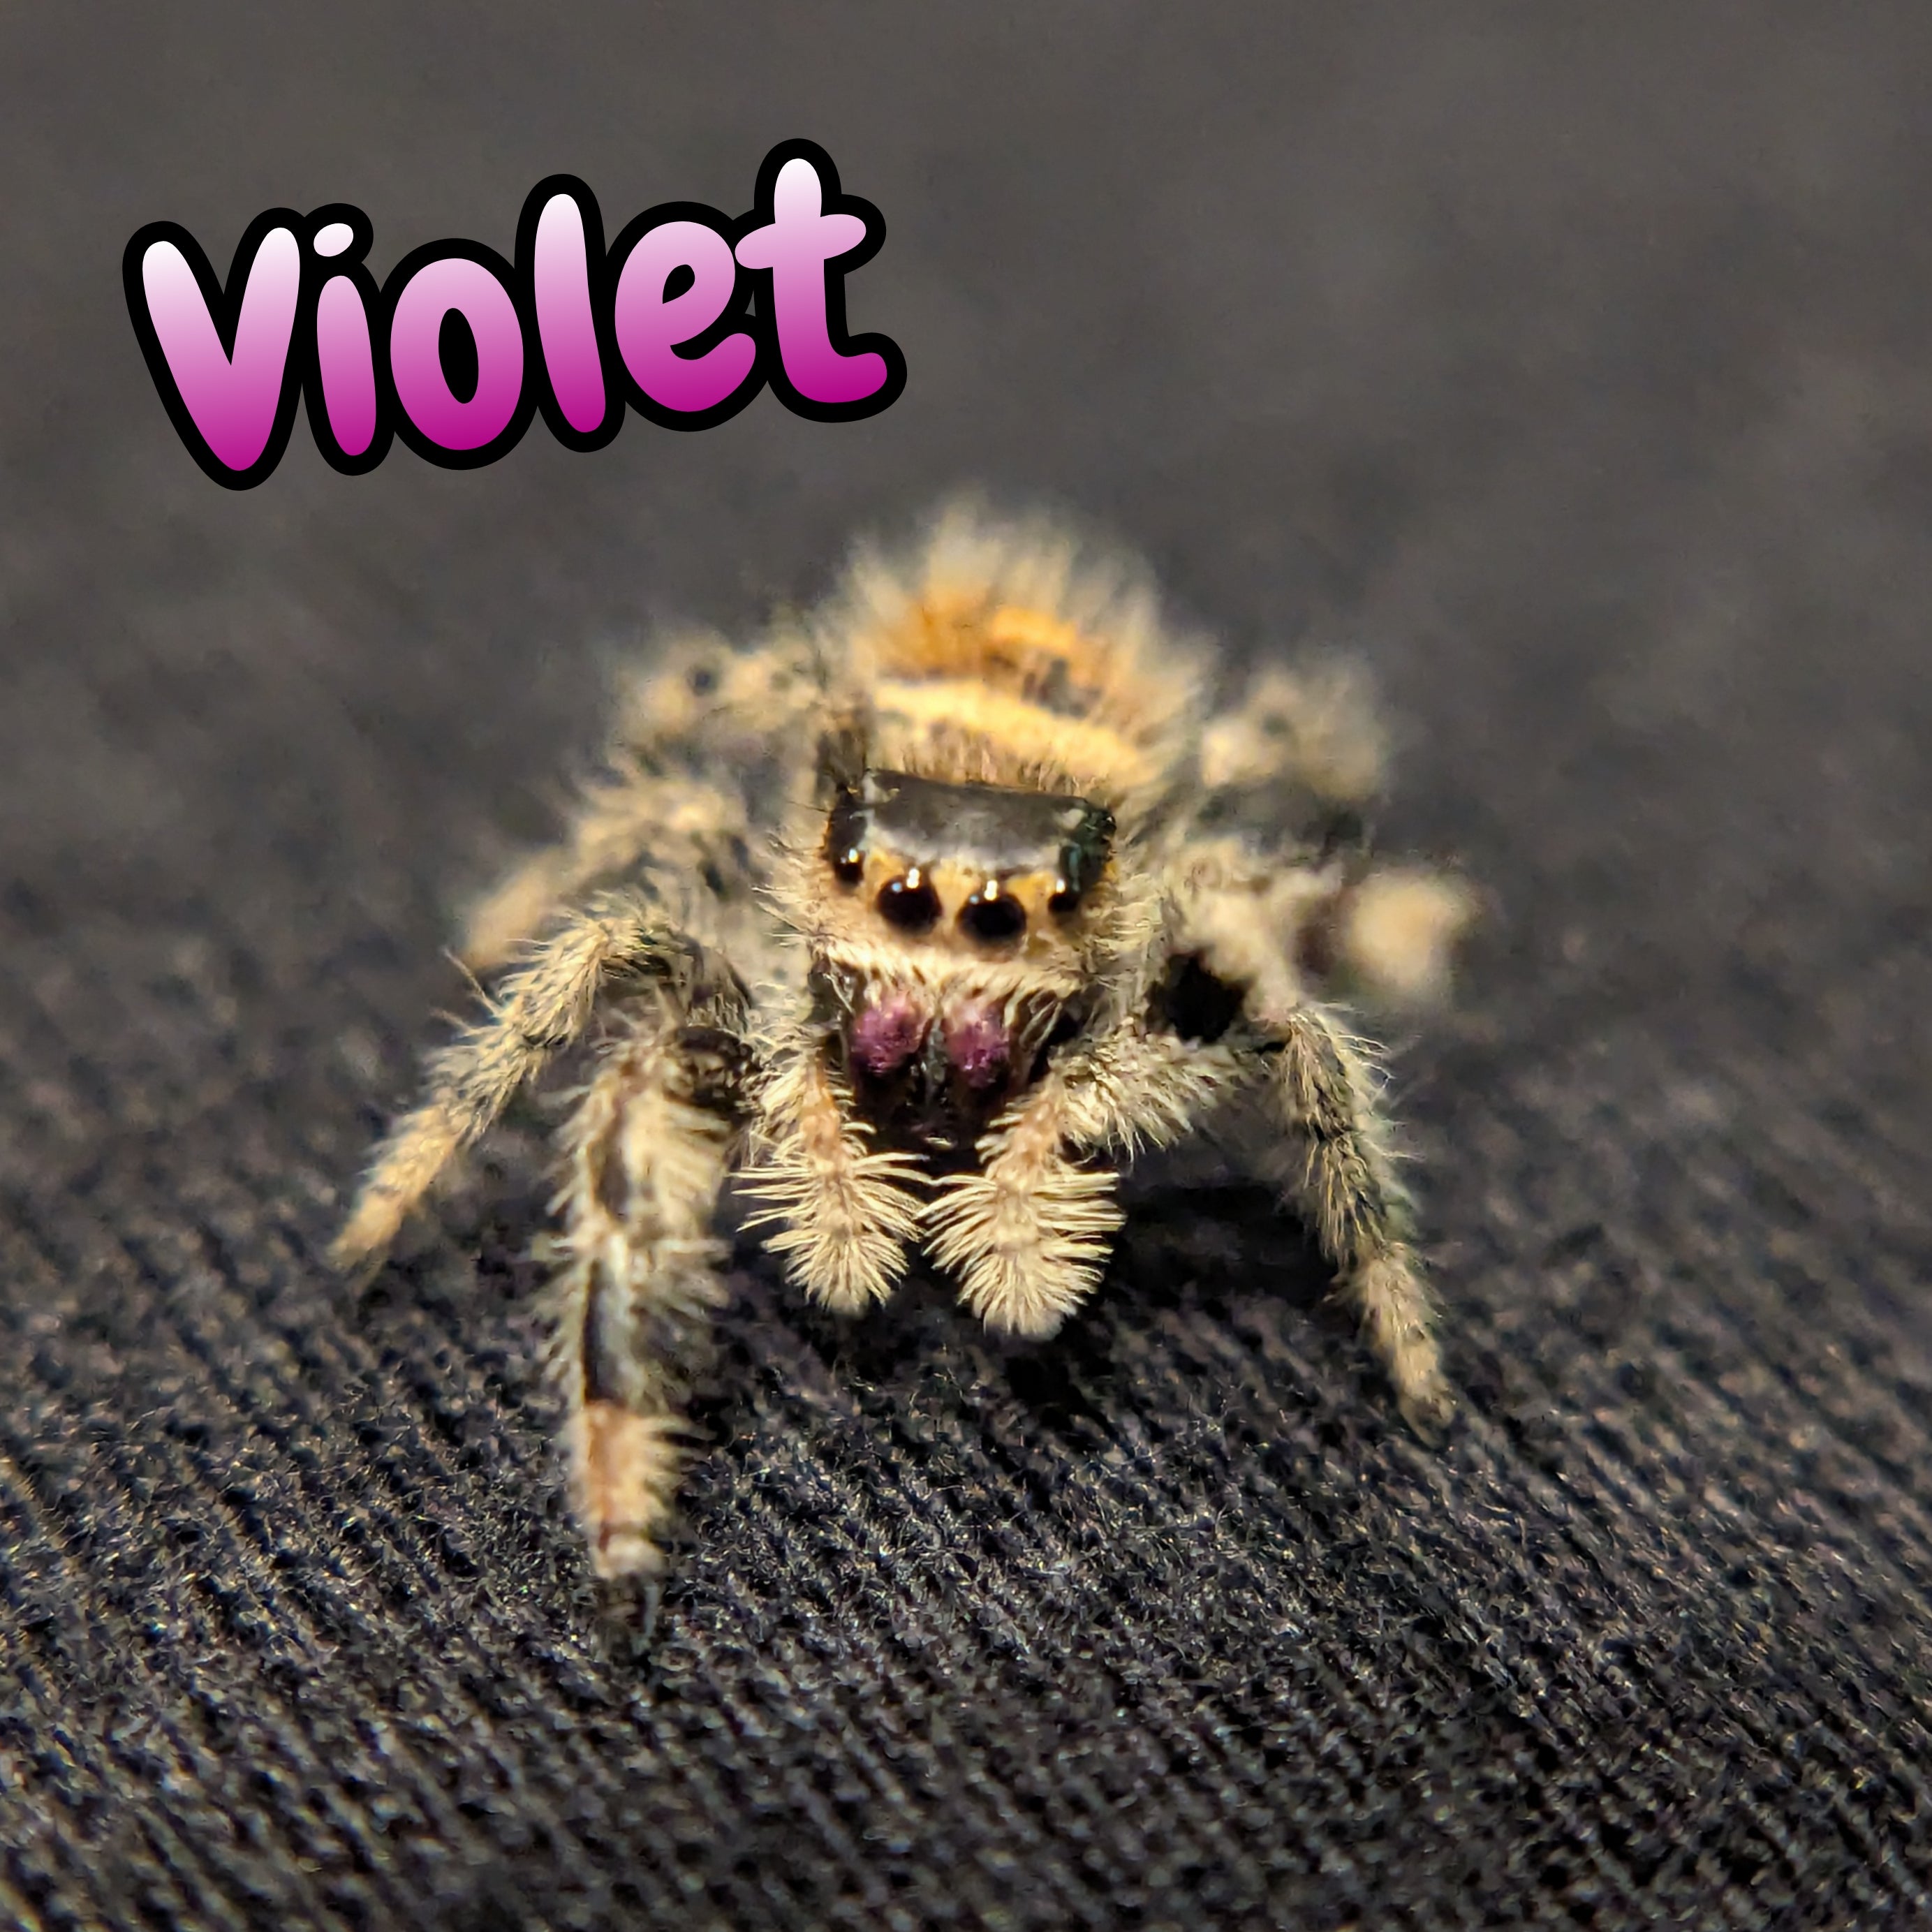 Regal Jumping Spider "Violet"